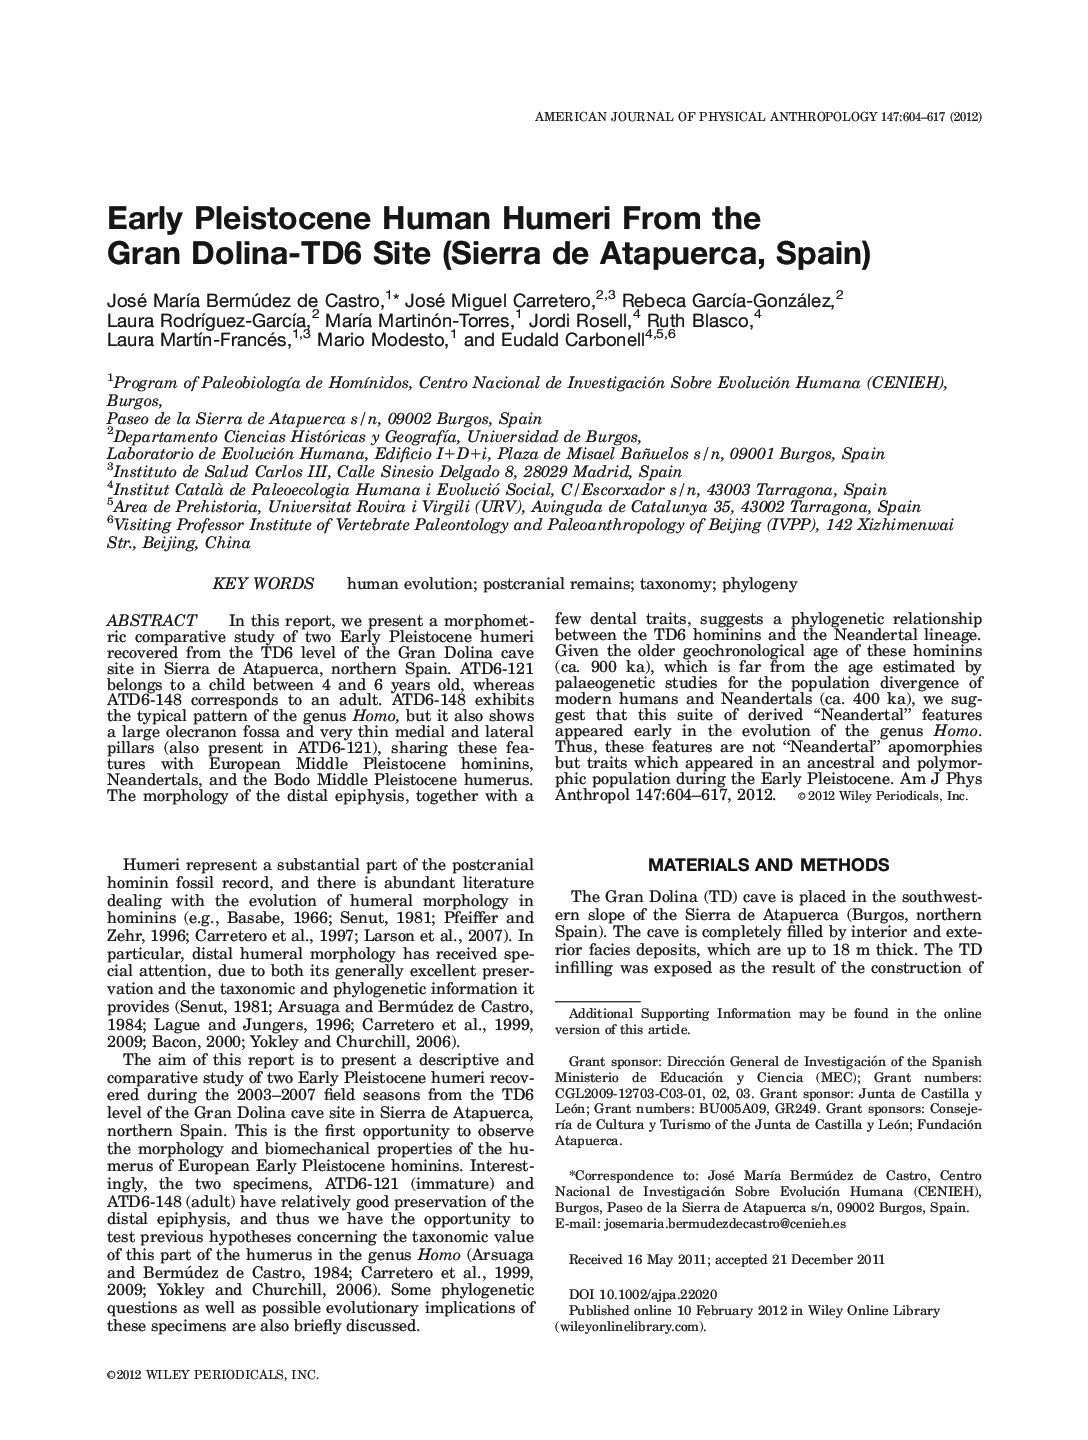 Early Pleistocene human humeri from the Gran Dolina-TD6 site (Sierra de Atapuerca, Spain)